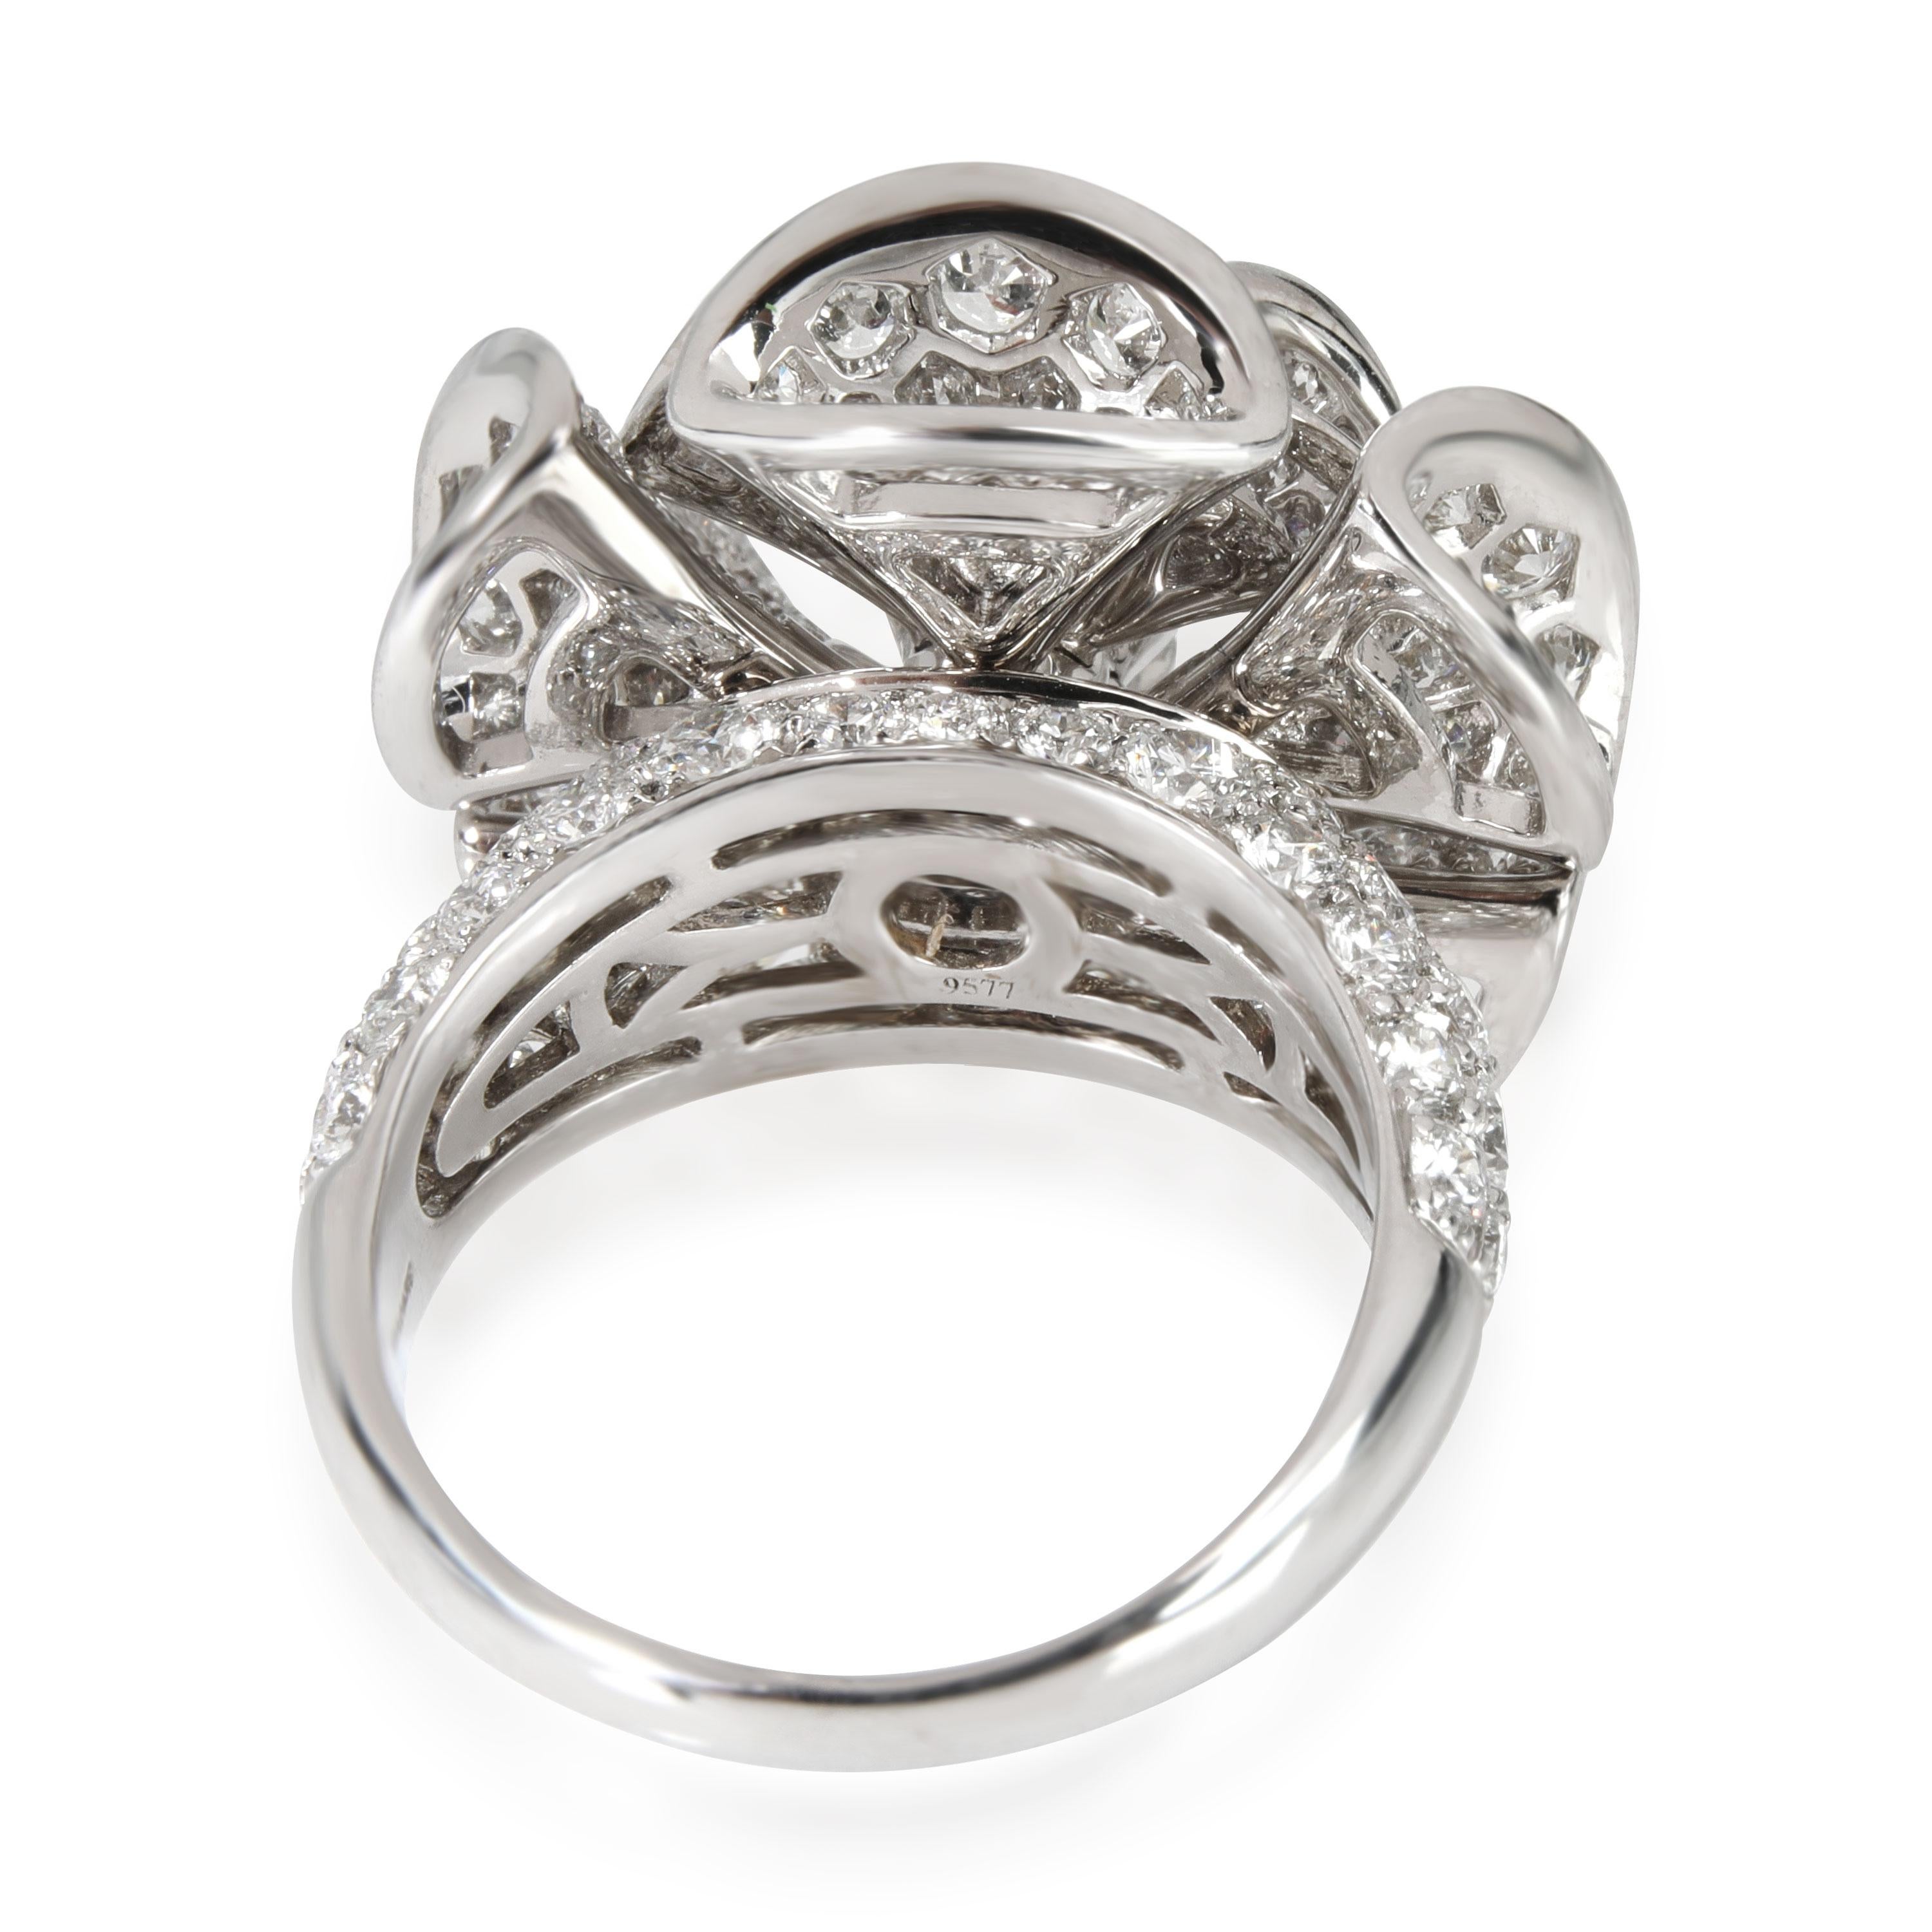 Bulgari Divas' Dream Diamond Ring in 18kt White Gold GIA F VVS2 5.00 CTW

PRIMARY DETAILS
SKU: 113660
Listing Title: Bulgari Divas' Dream Diamond Ring in 18kt White Gold GIA F VVS2 5.00 CTW
Condition Description: Retails for 70000 USD. In excellent